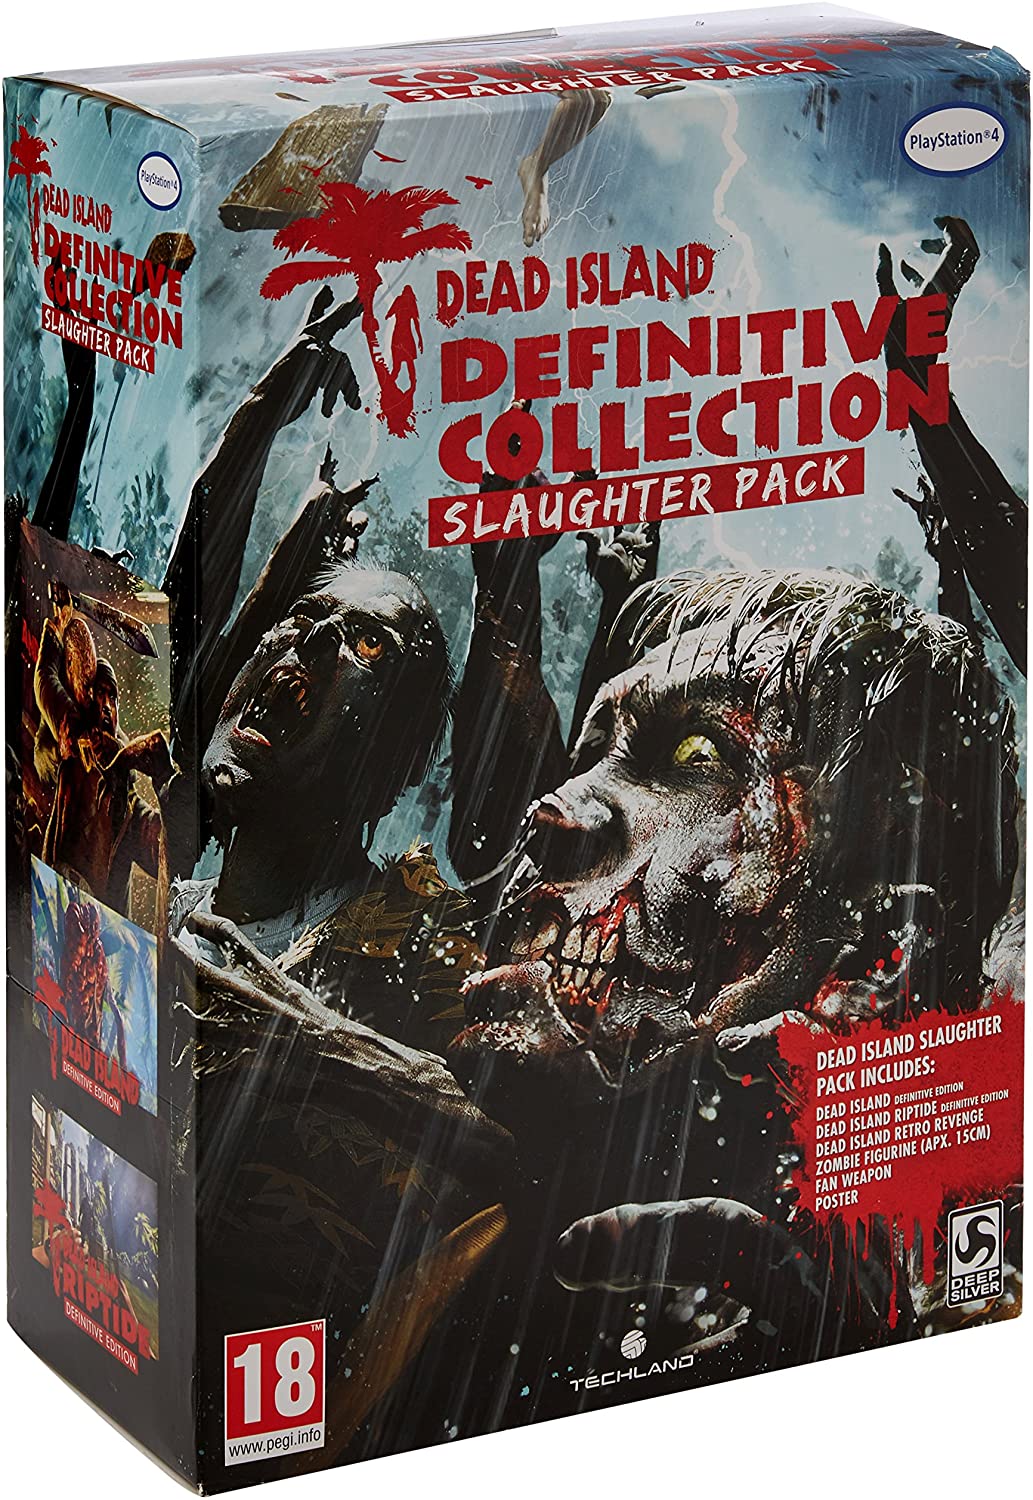 Dead Island Definitive Collection Slaughter Pack (újszerű) - PlayStation 4 Játékok